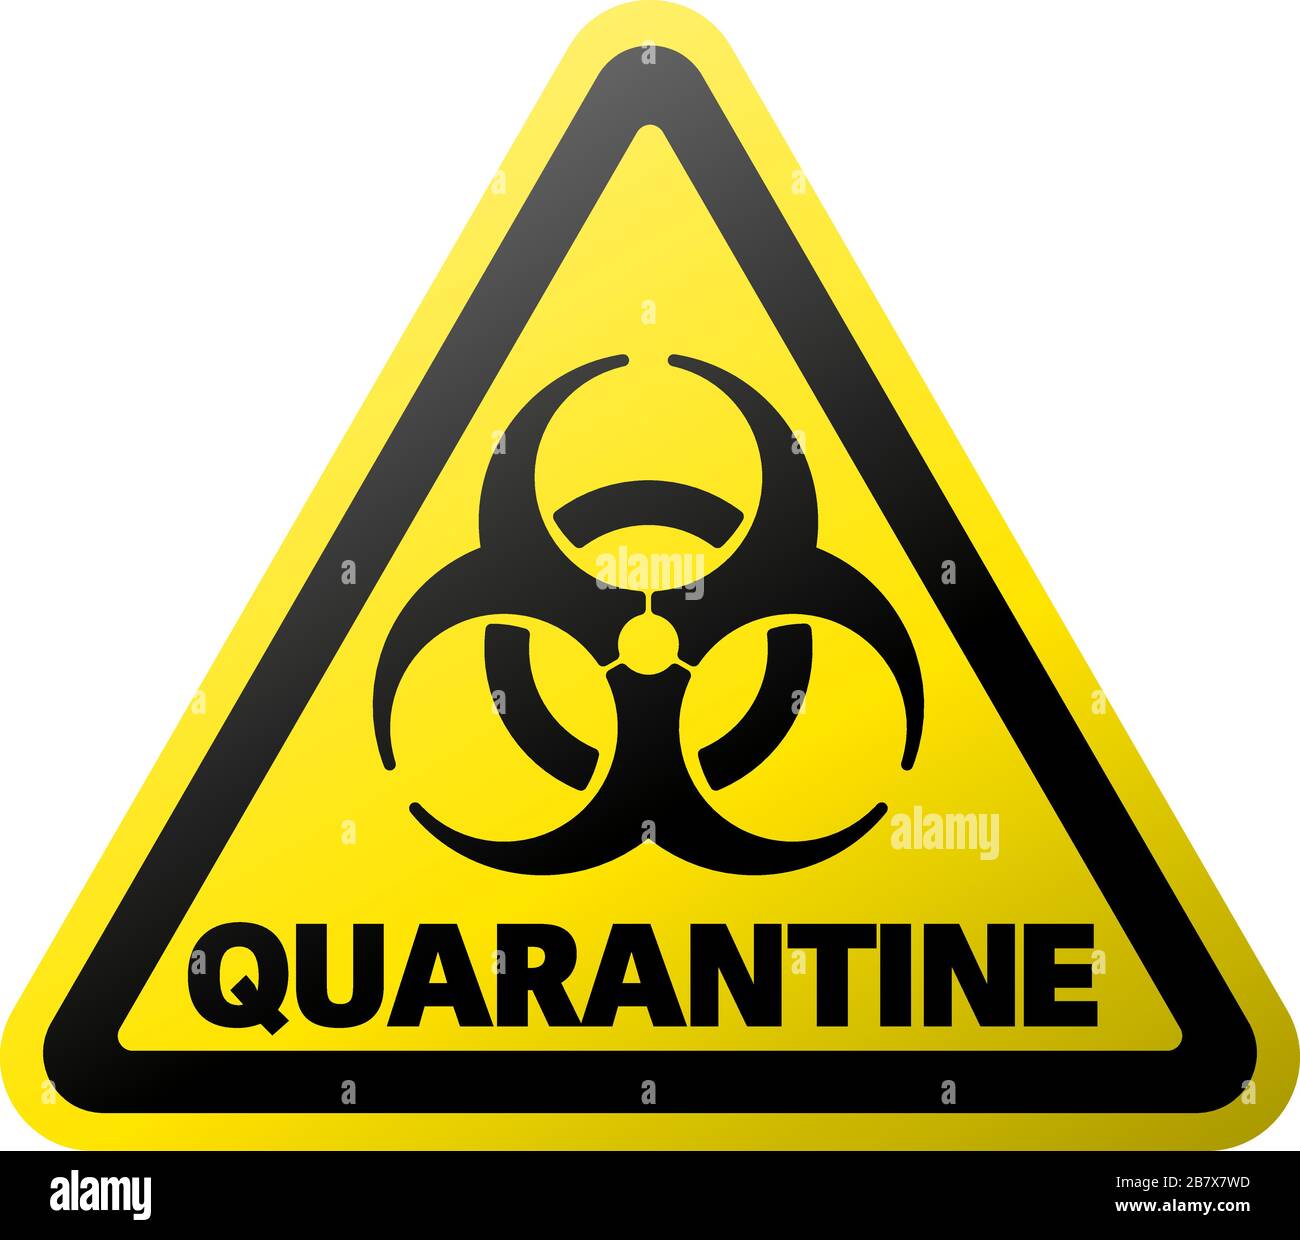 triangular yellow and black QUARANTINE warning sign with biohazard symbol vector illustration Stock Vector